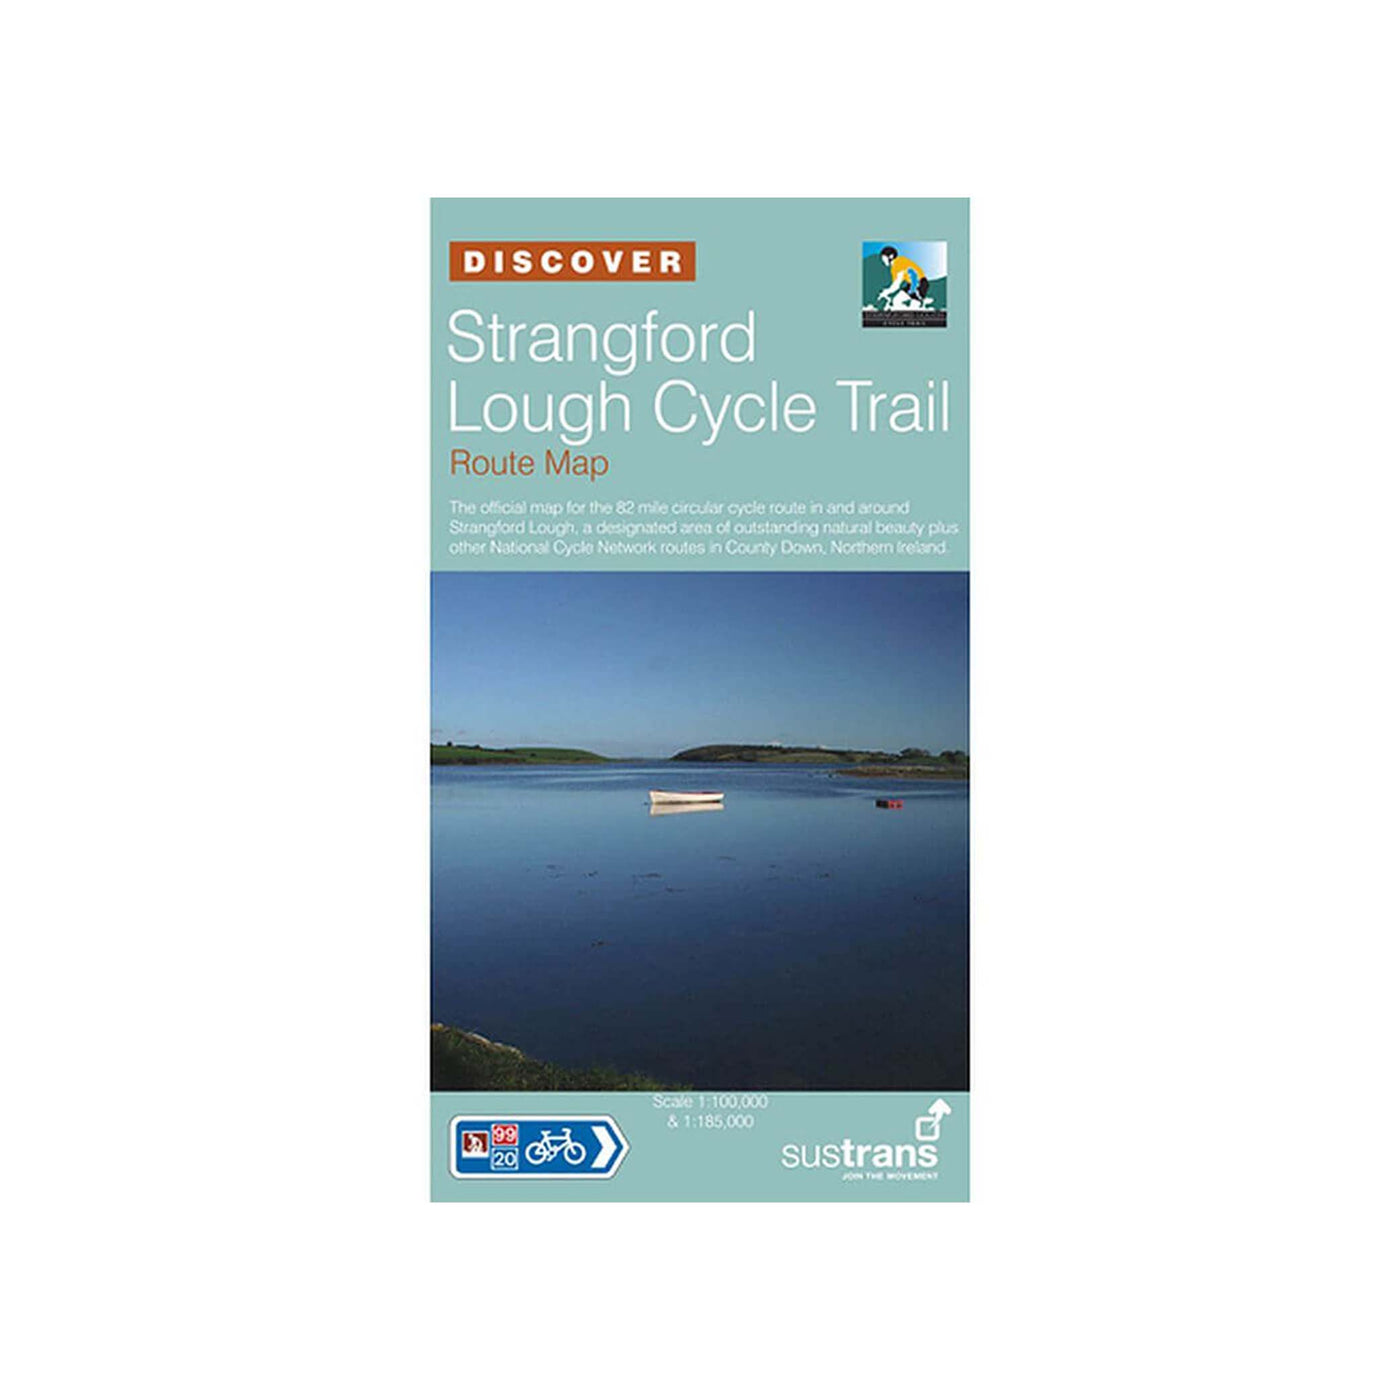 Strangford Lough Cycle Trail